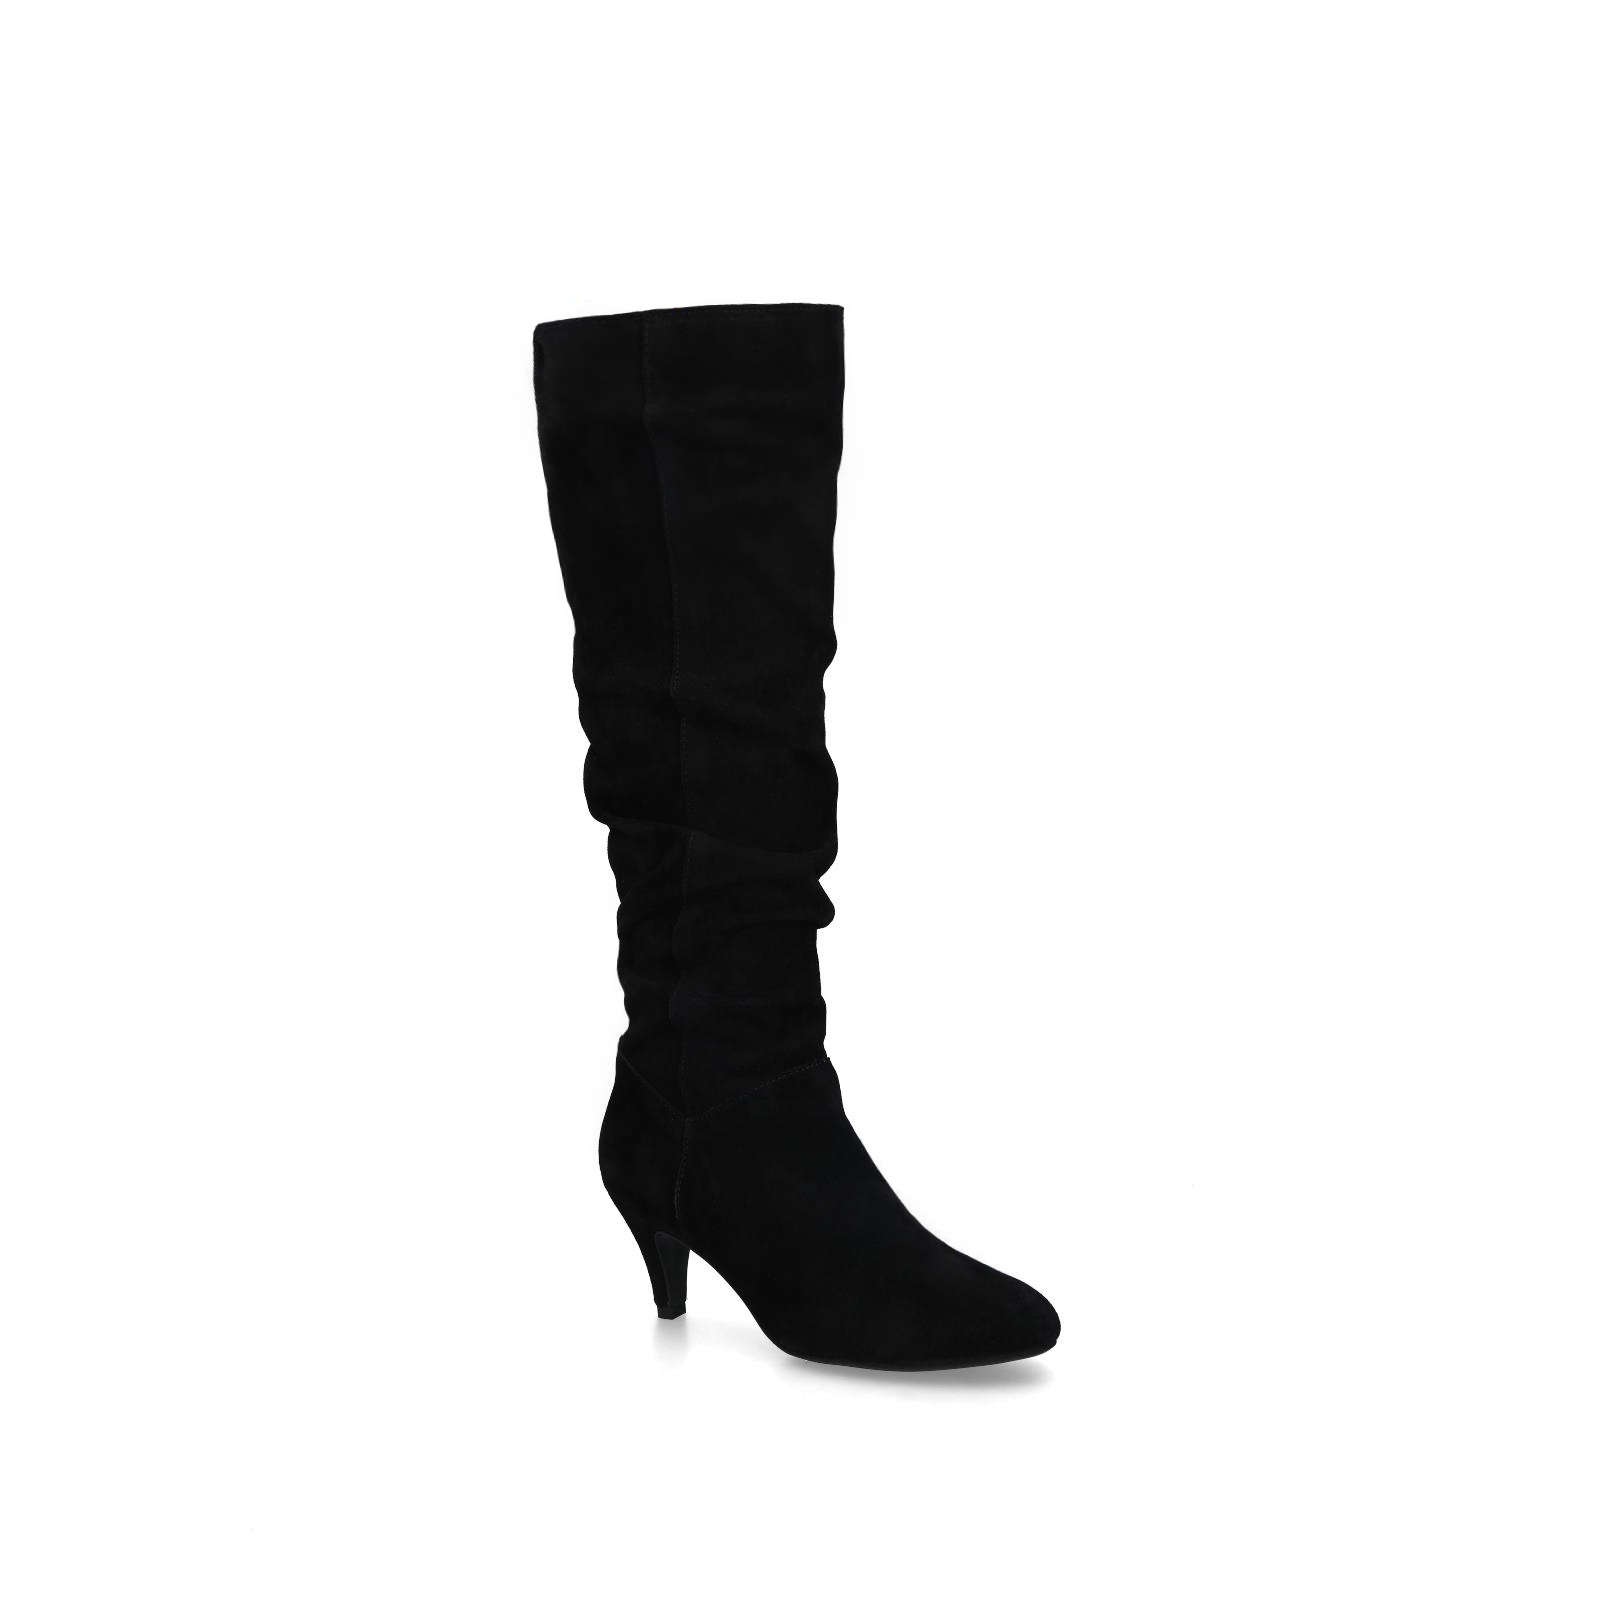 carvela knee high boots sale